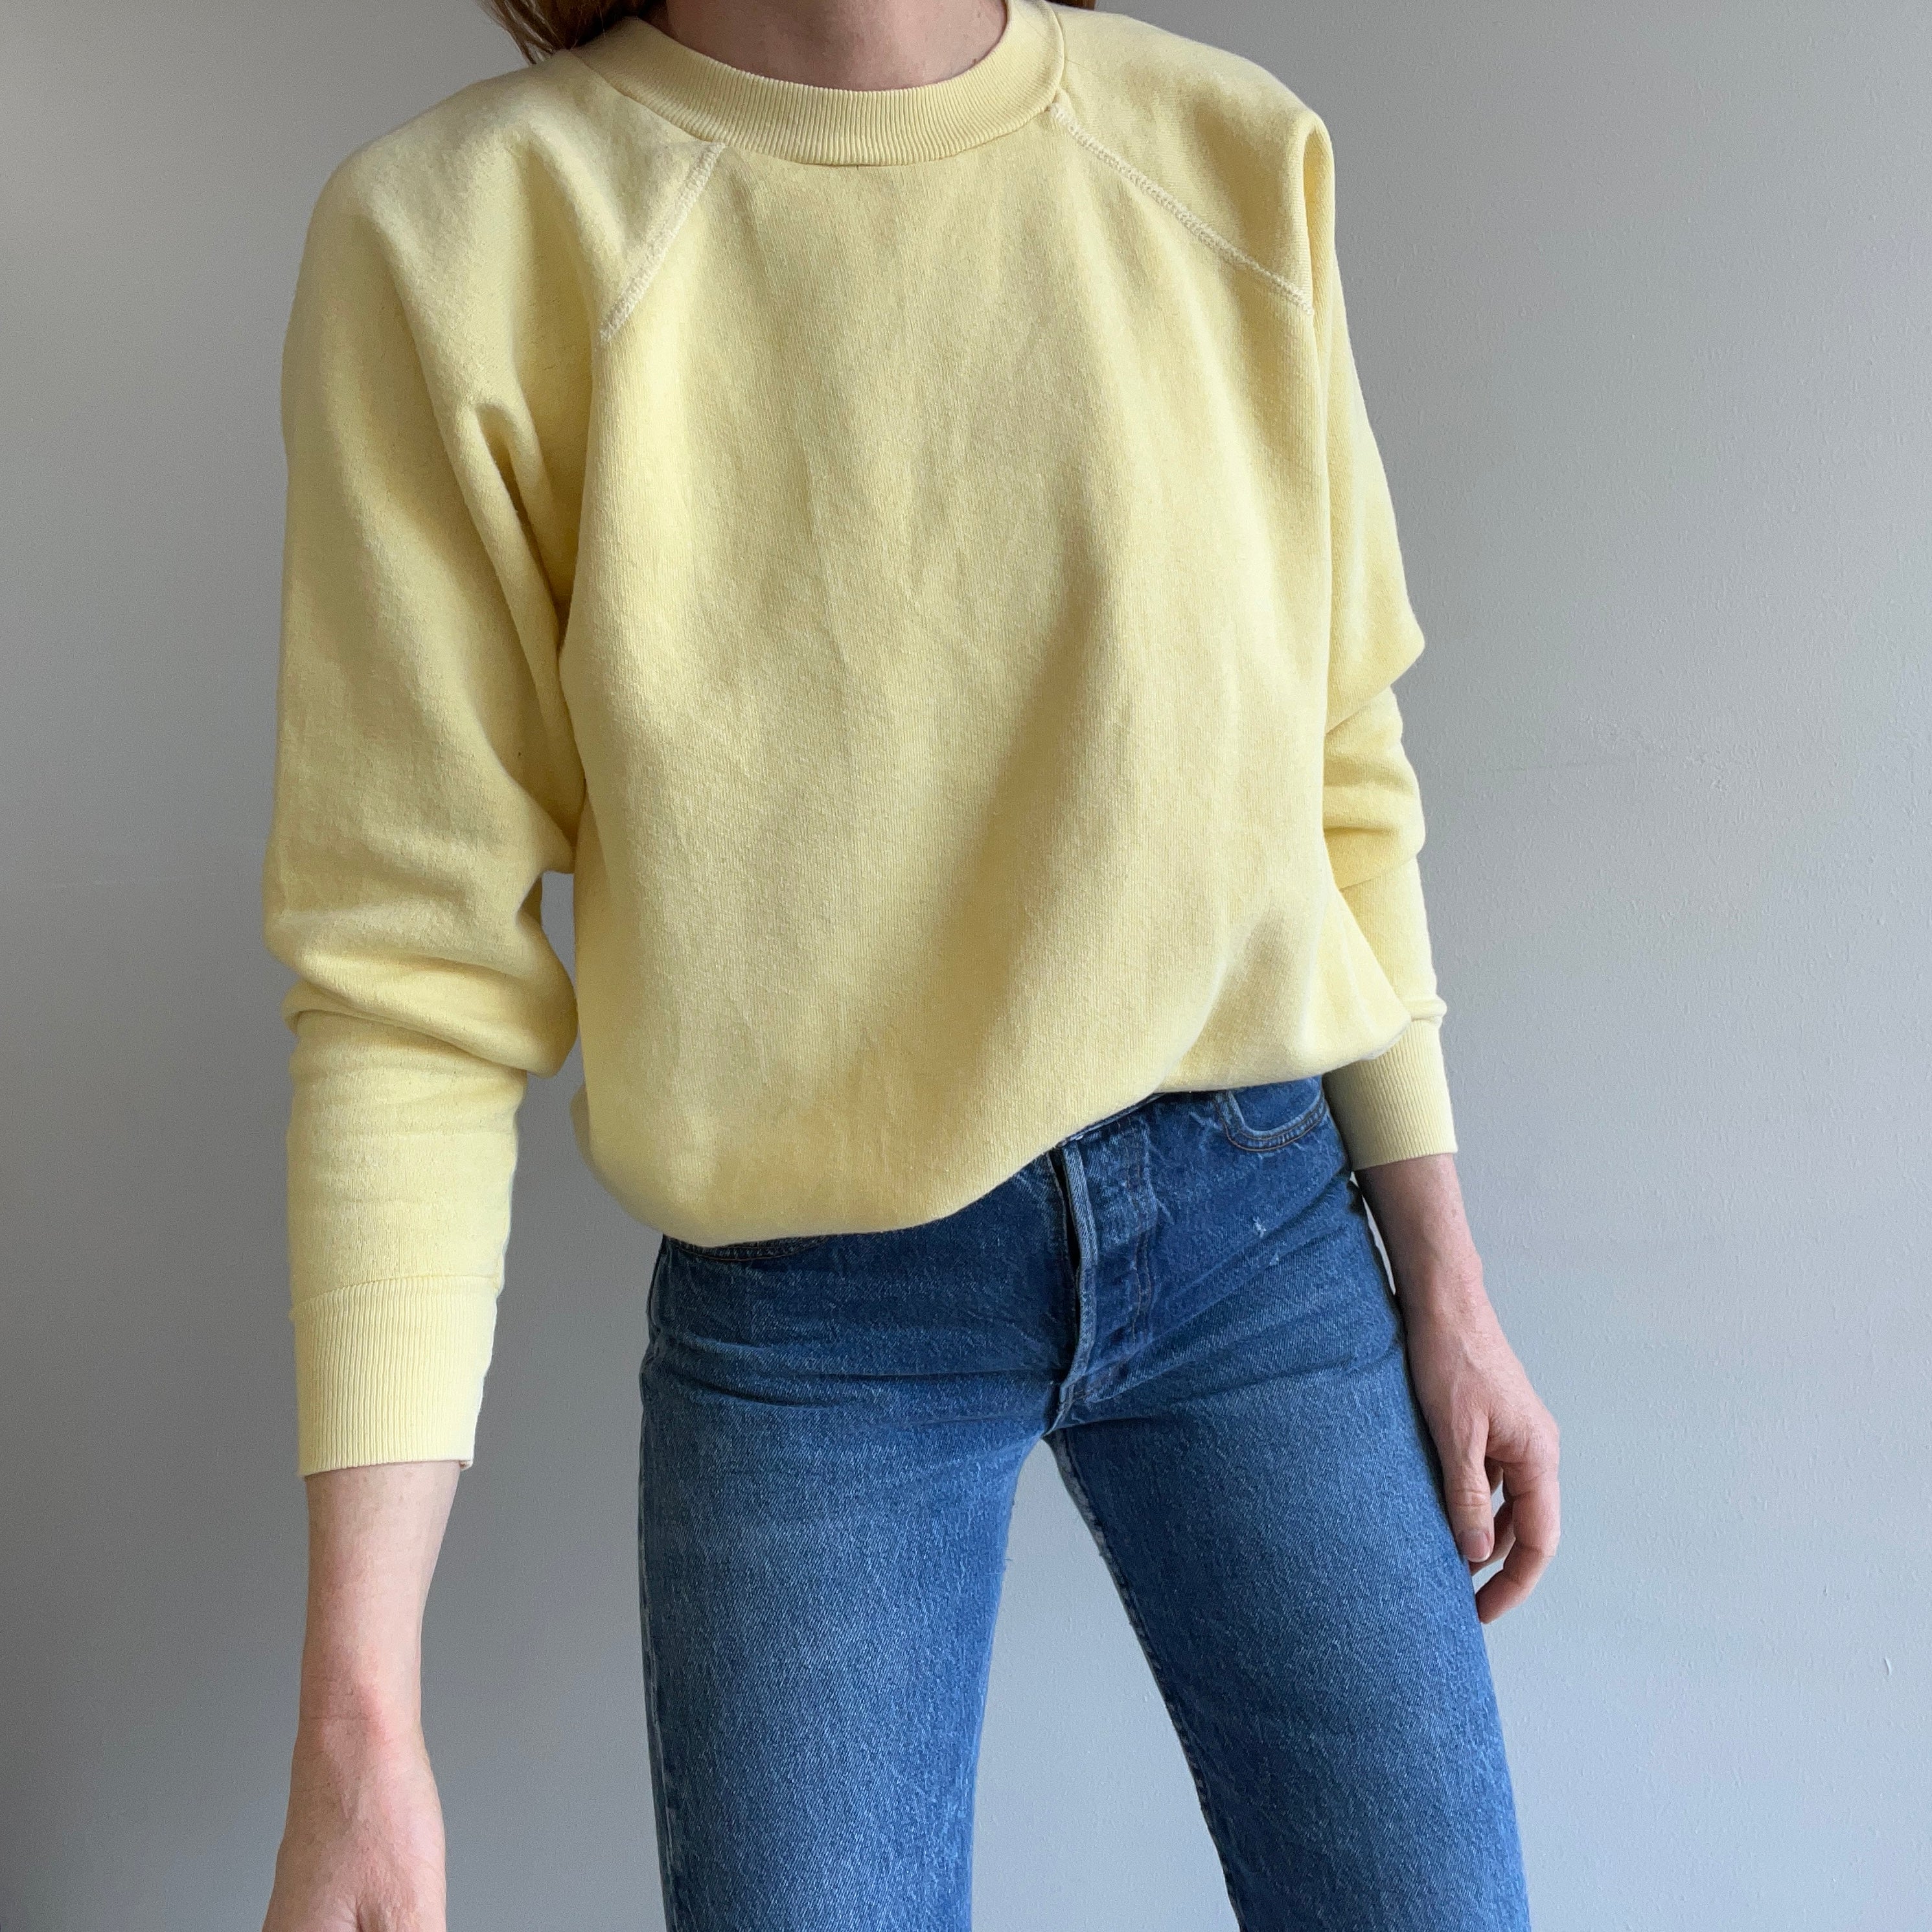 Sweat-shirt raglan vierge jaune pastel des années 1970/80